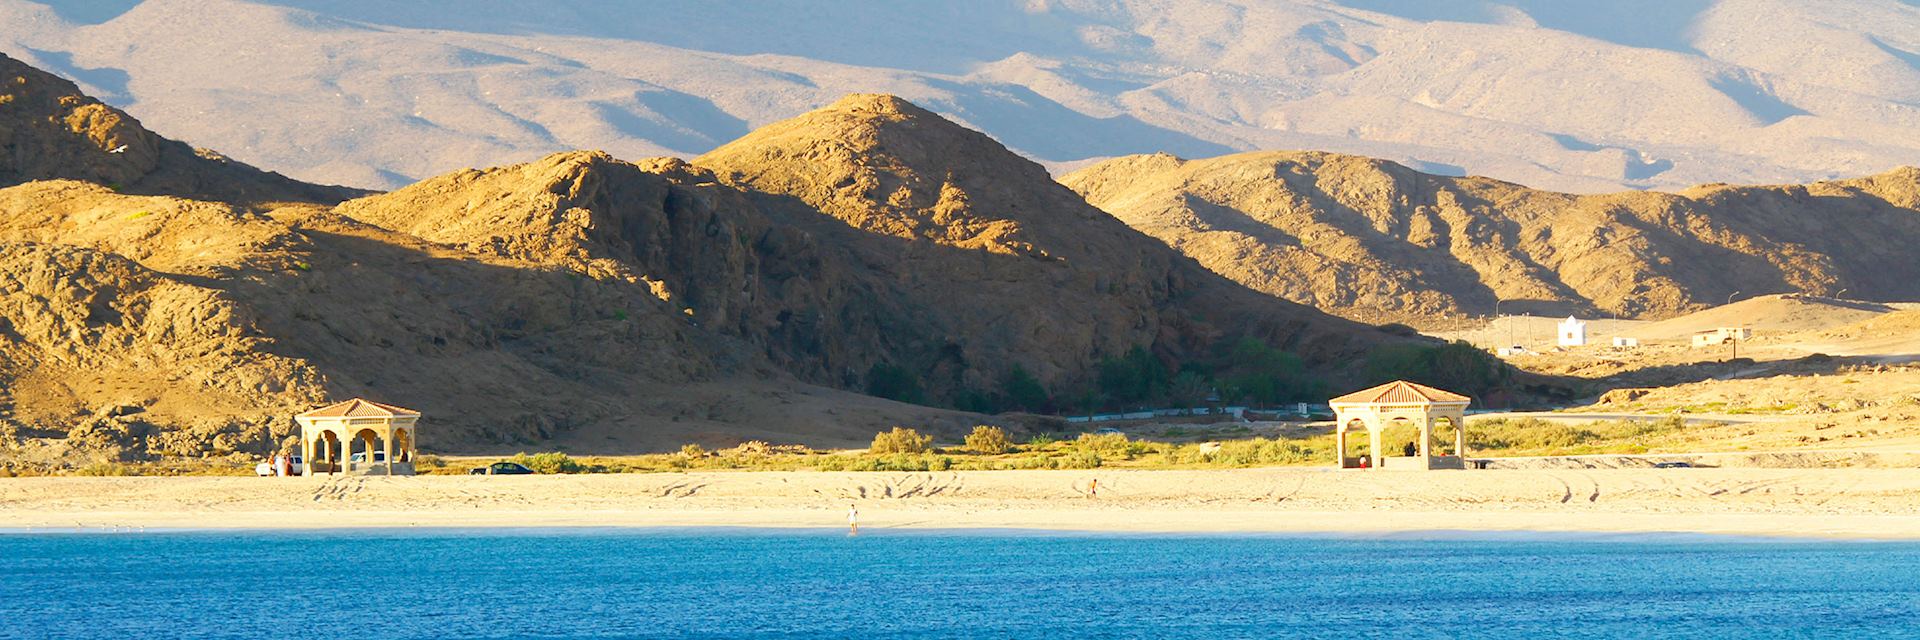 Coastal landscape in Oman